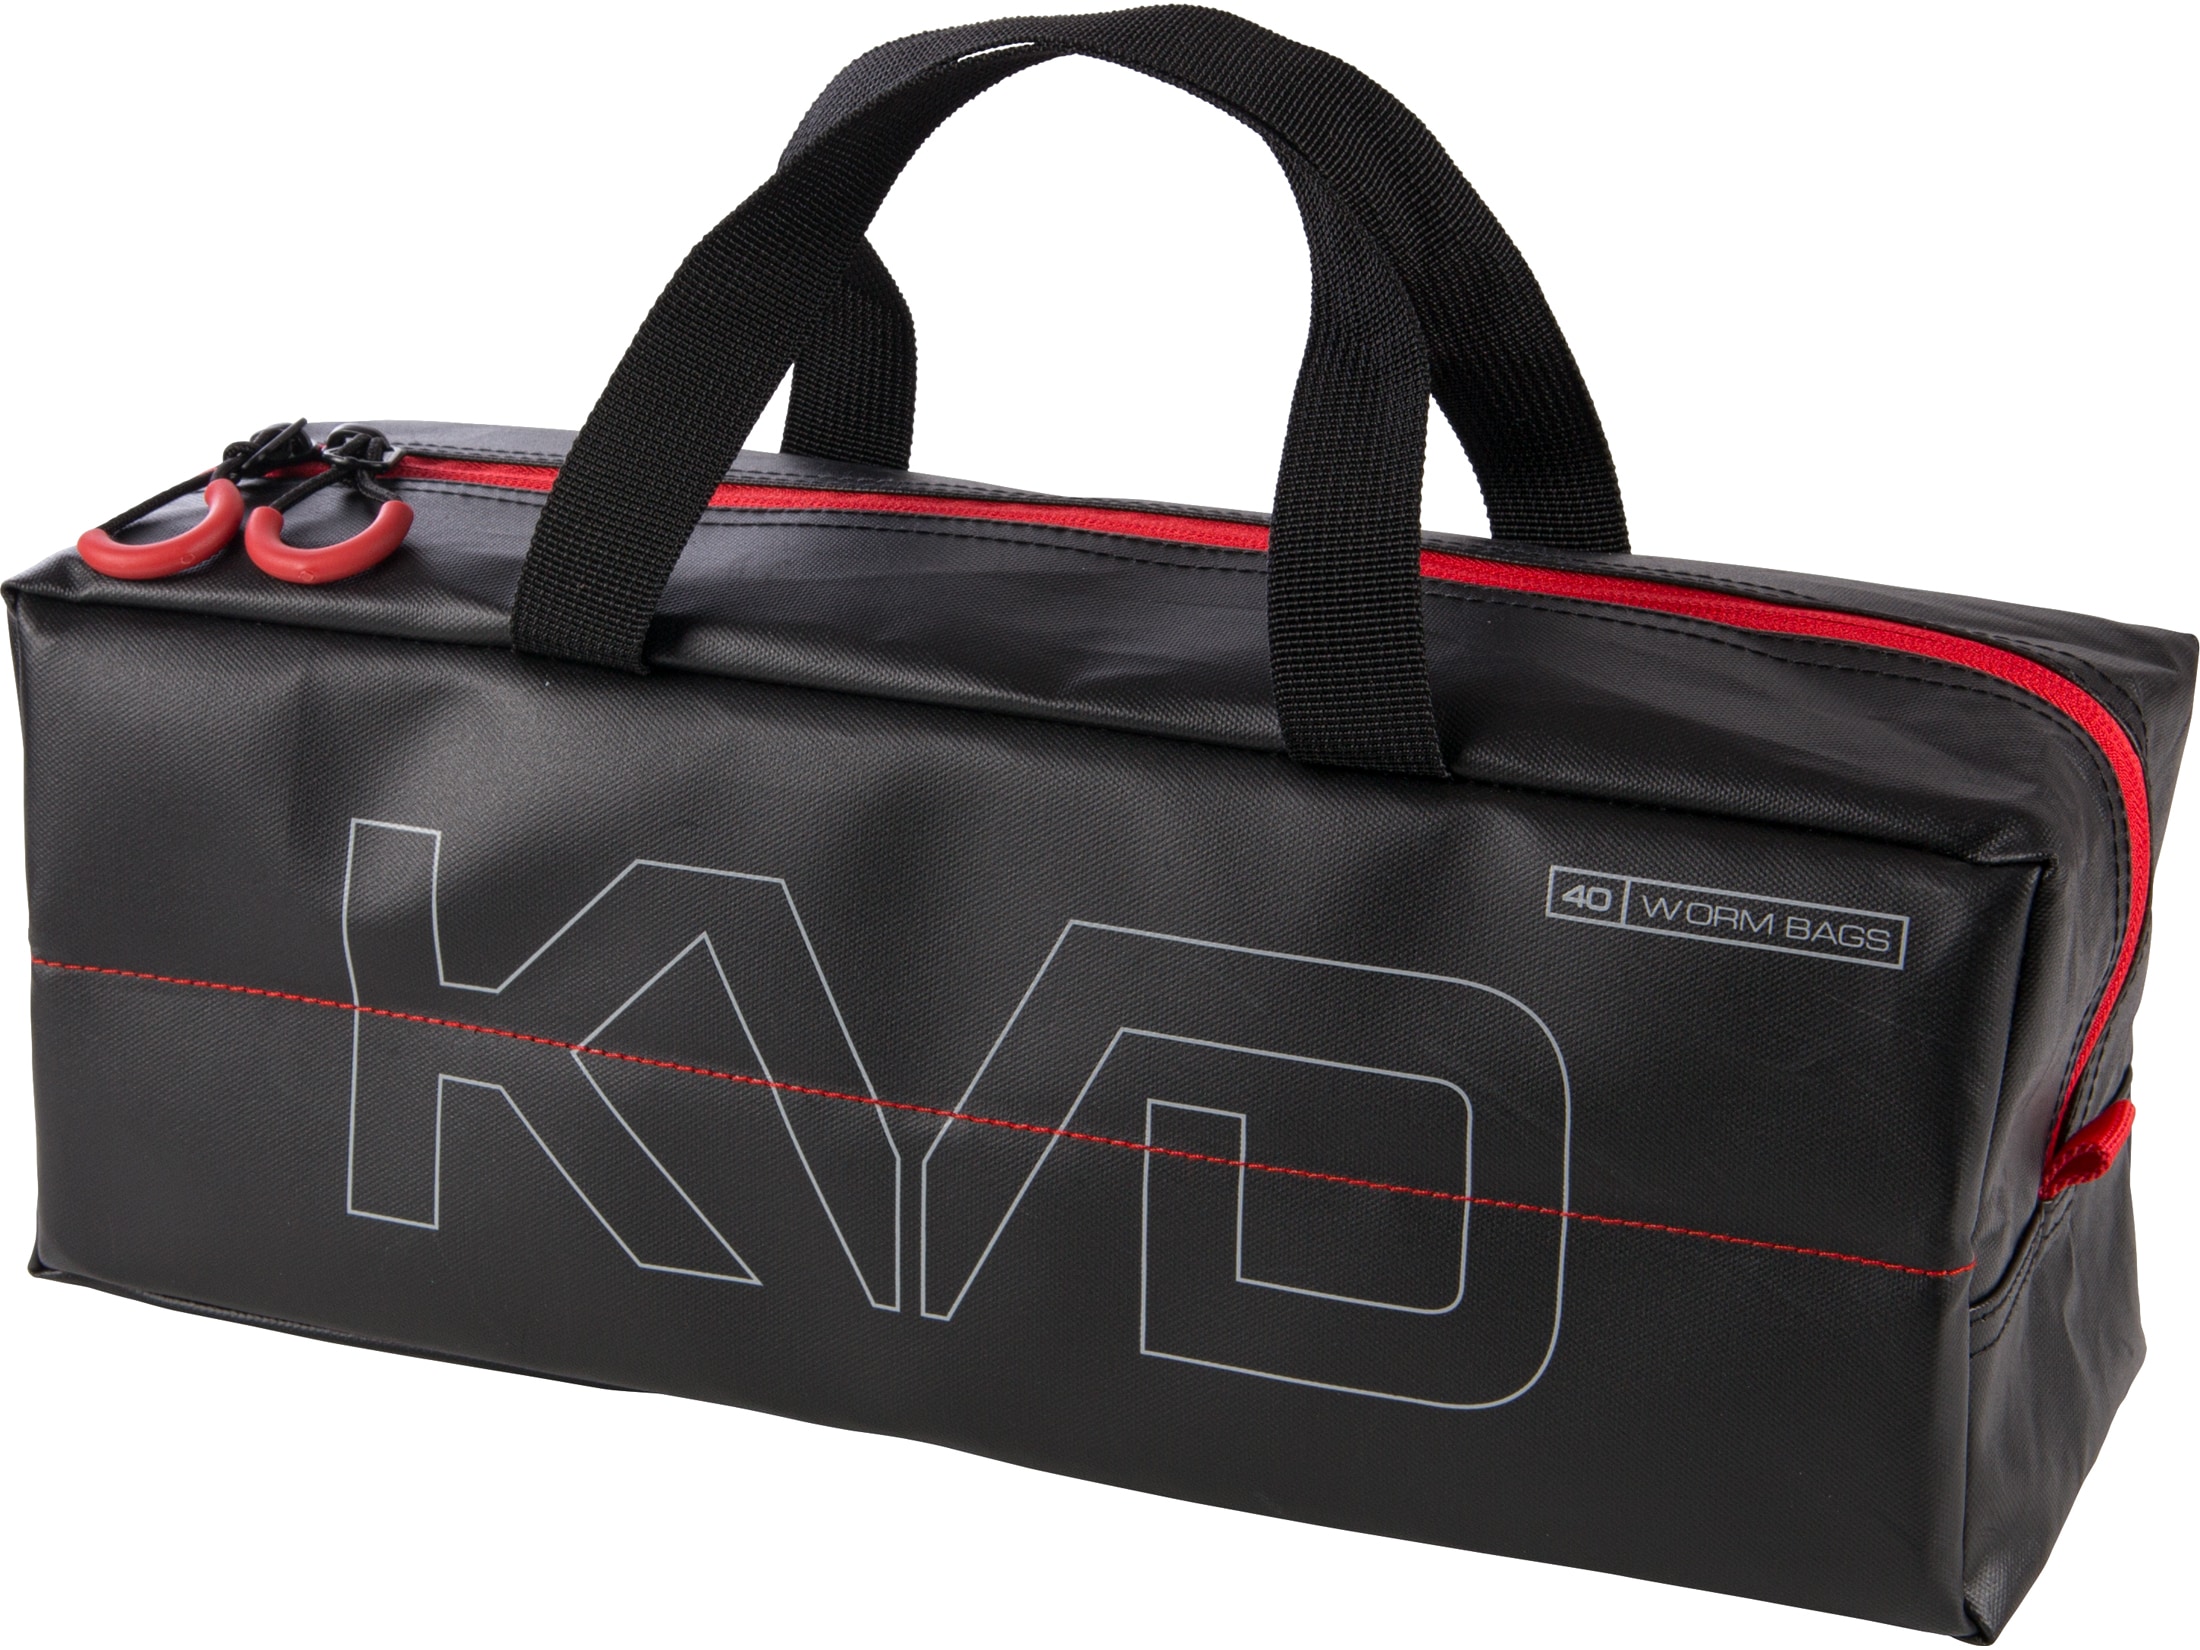 Plano KVD Wormfile Speedbag Tackle Bag Large